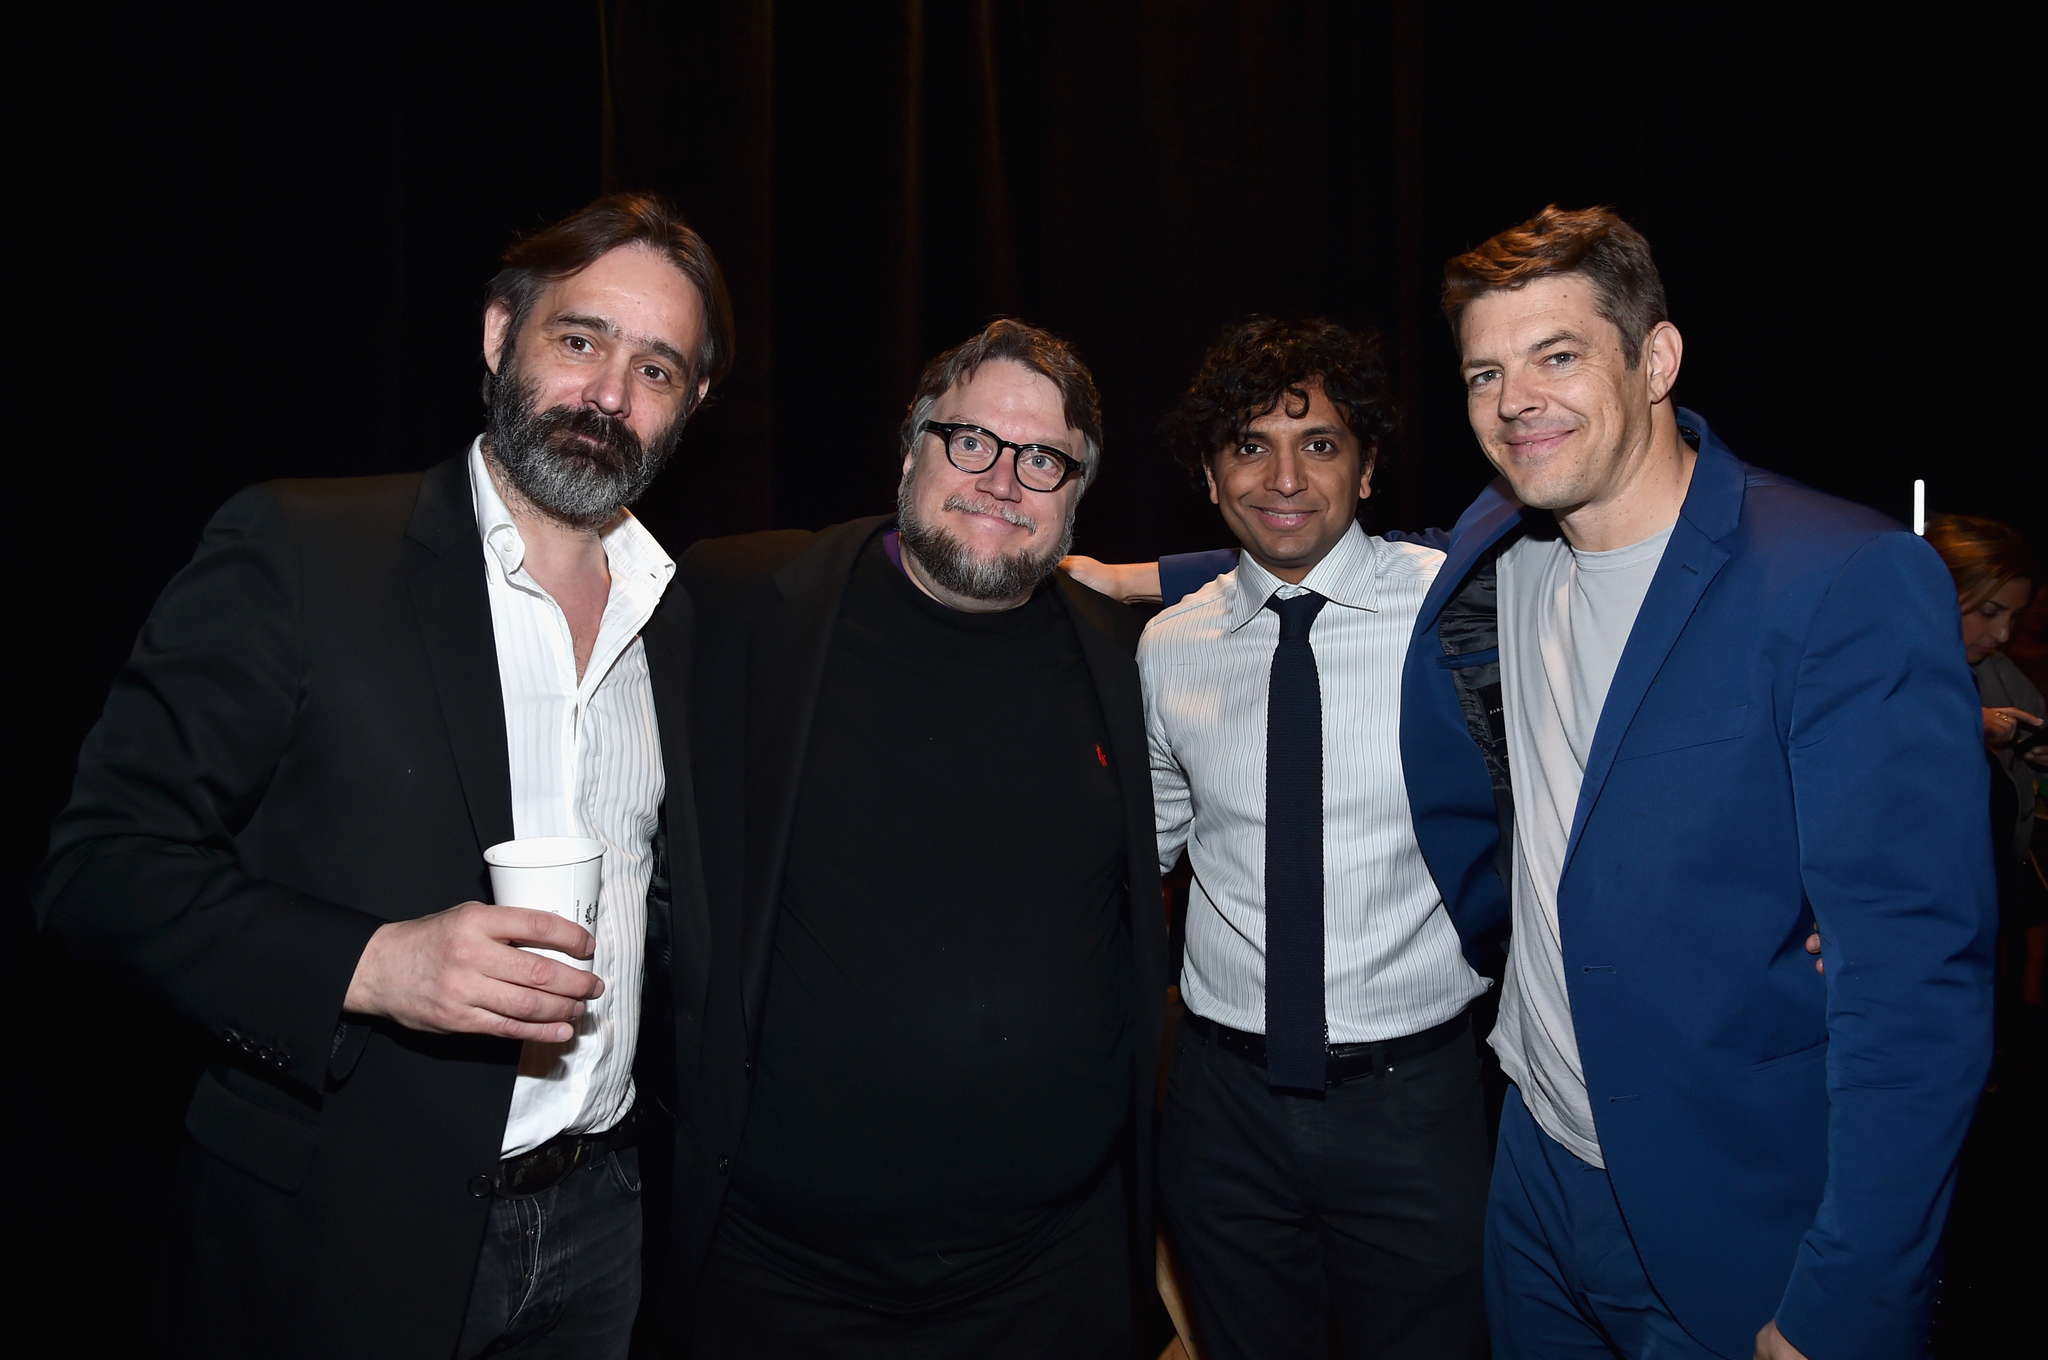 Jason Blum, Baltasar Kormákur, M. Night Shyamalan and Guillermo del Toro